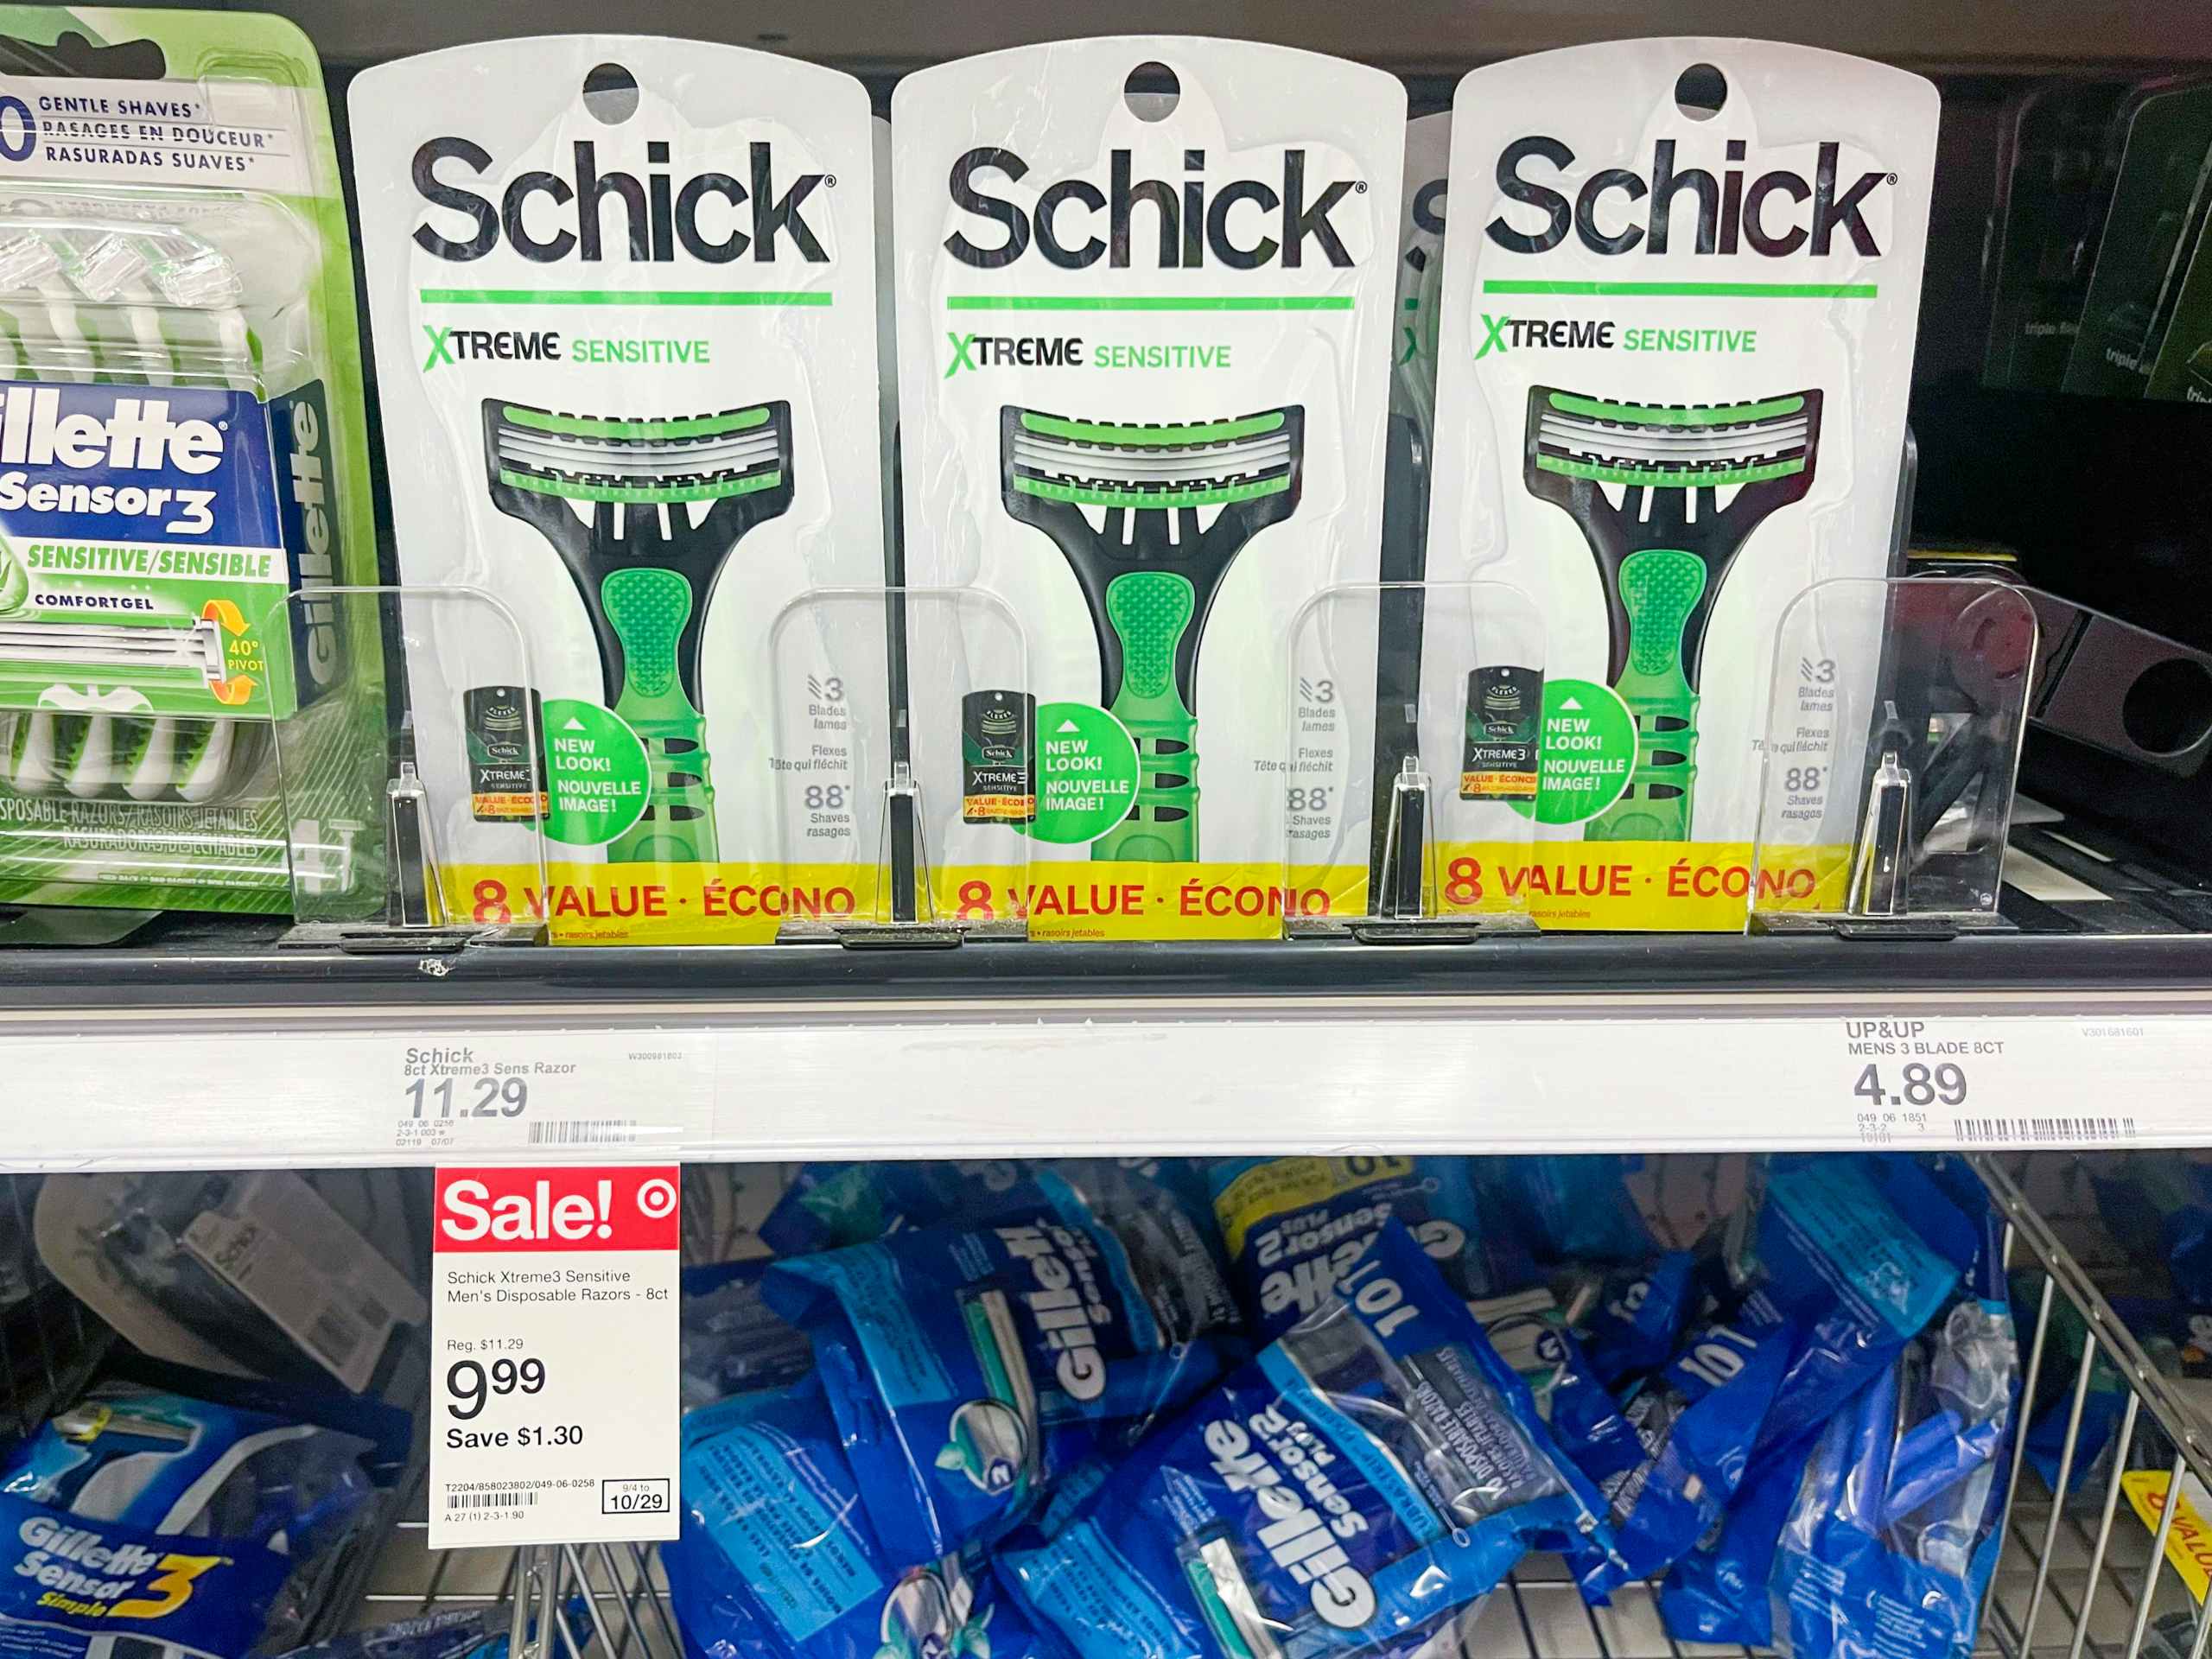 Schick Extreme Sensitive razors sitting on a store shelf with a Sale sticker underneath them.